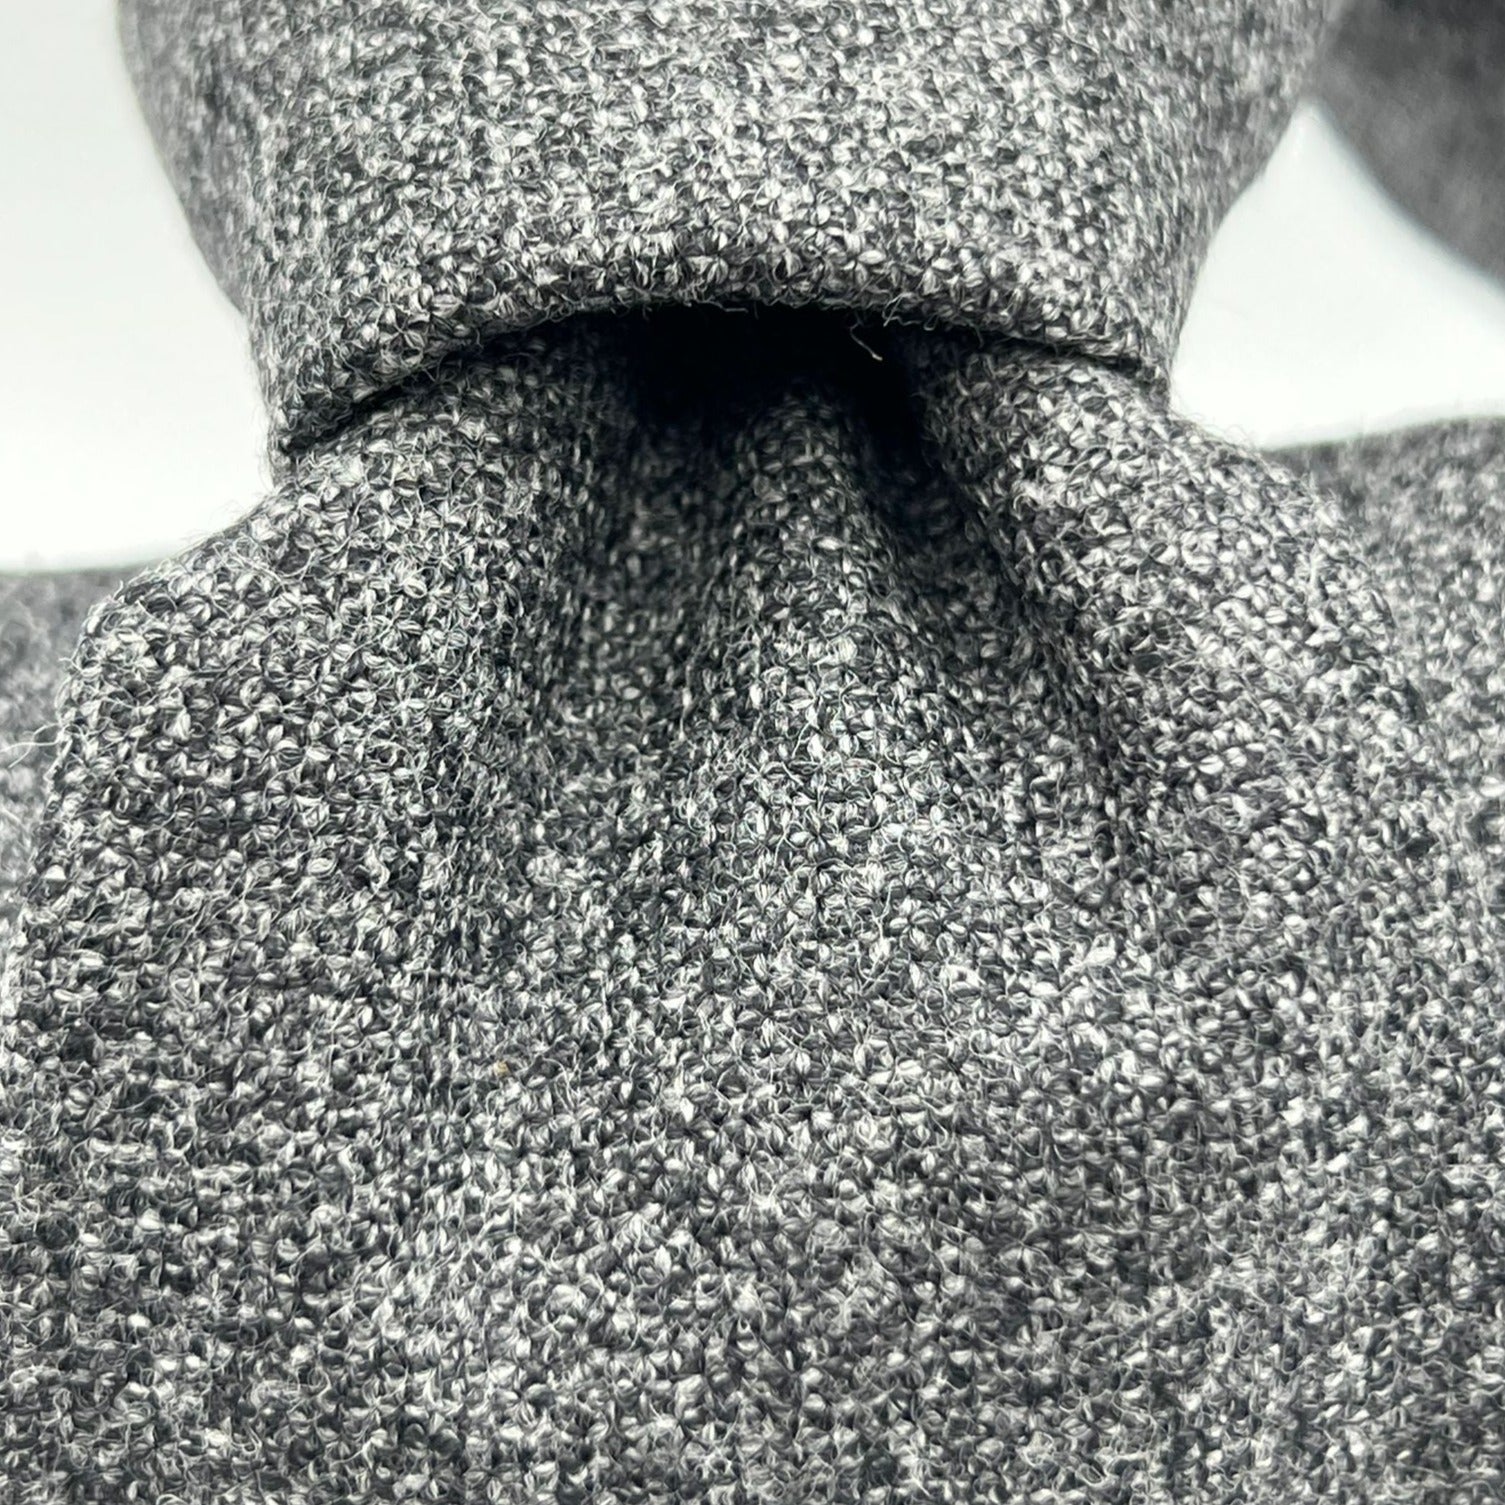 Cruciani & Bella 100% Wool Tipped Melange Tie  Grey Handmade in Italy 9 cm x 149 cm New Old Stock #7337